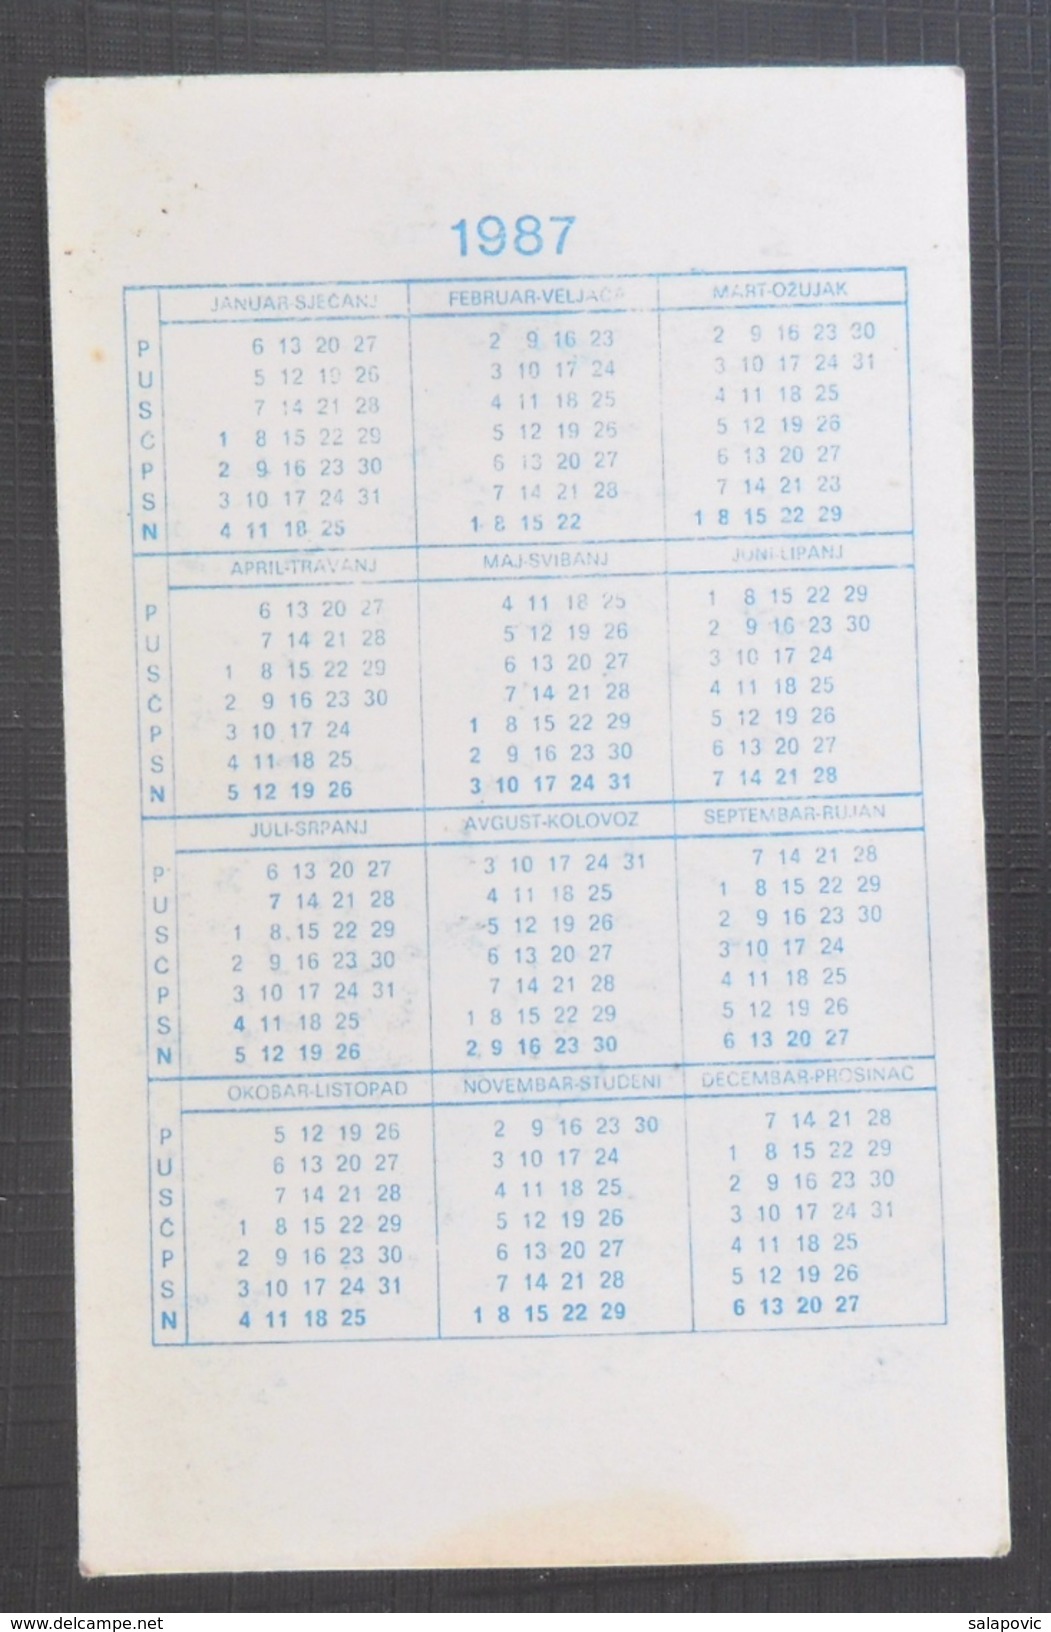 SD DARDA, CROATIA  FOOTBALL CLUB, SOCCER / FUTBOL / CALCIO, Calendar Kalender Calendrier Kalendar 1987 - Habillement, Souvenirs & Autres